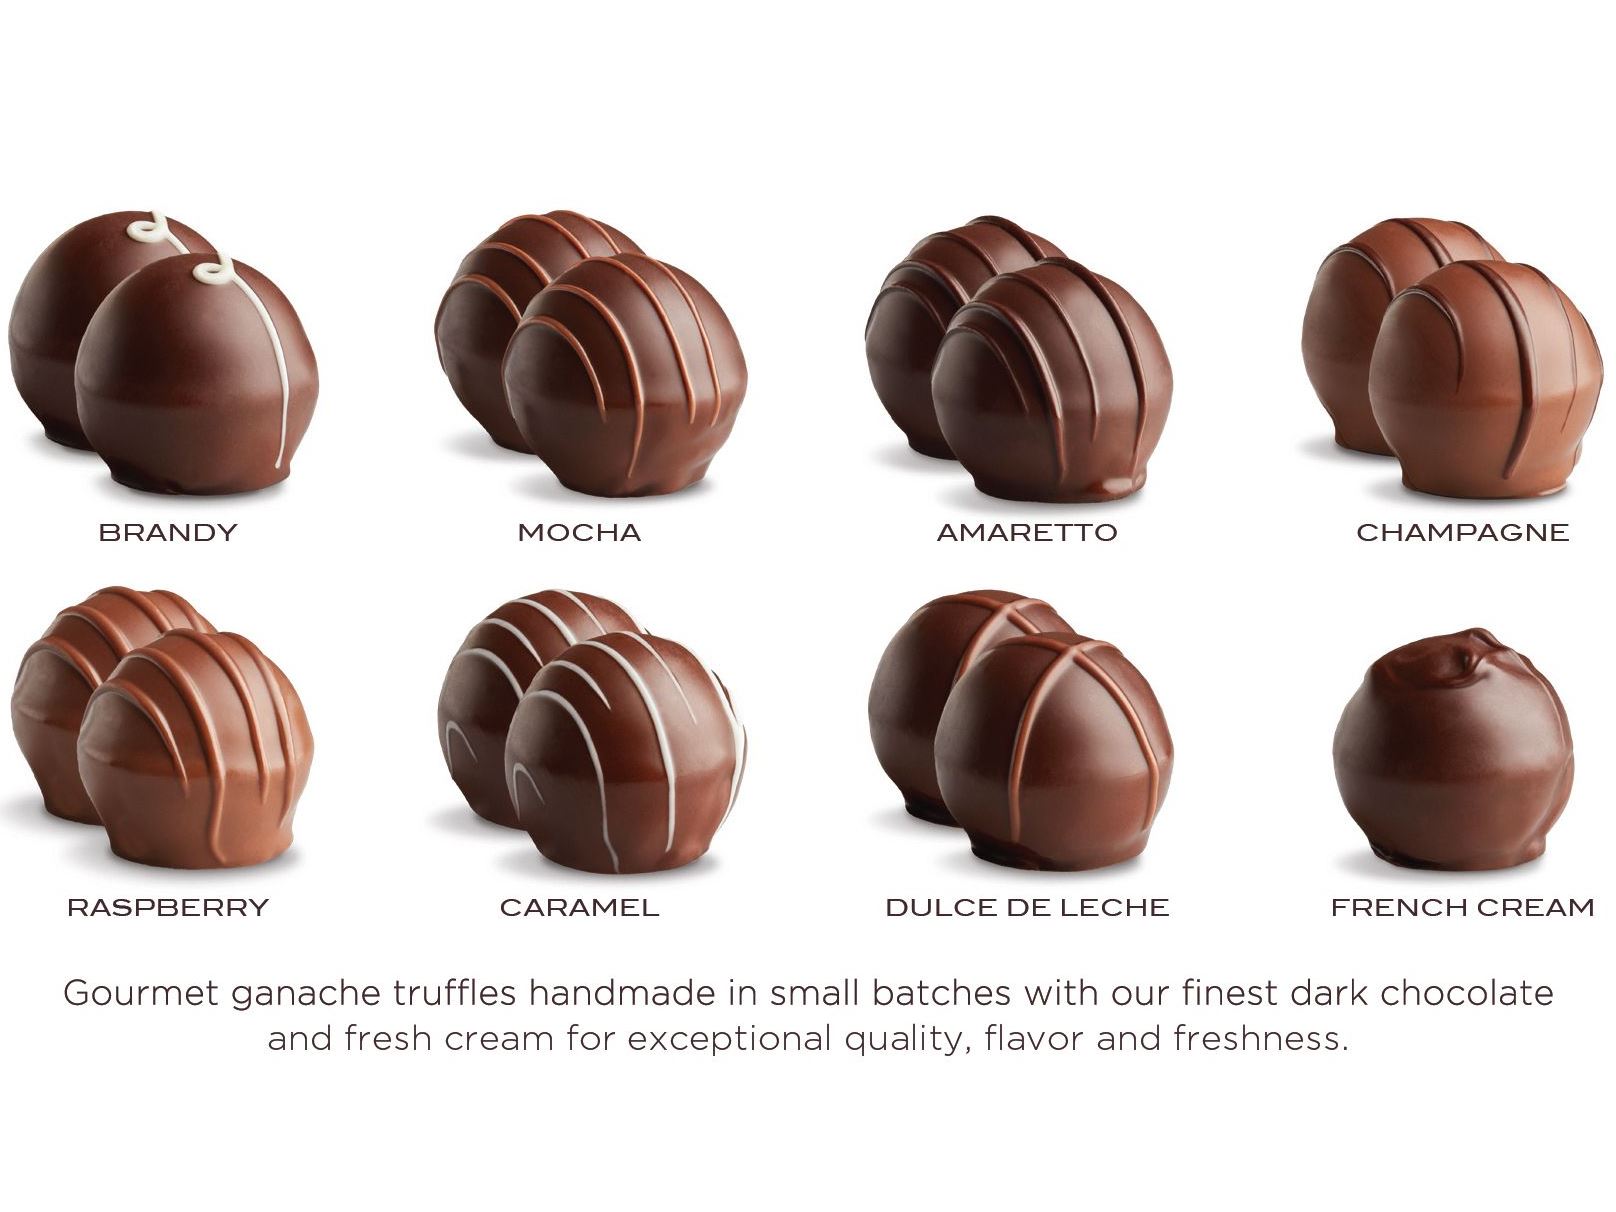 Handcrafted Chocolate Truffle Gift Box